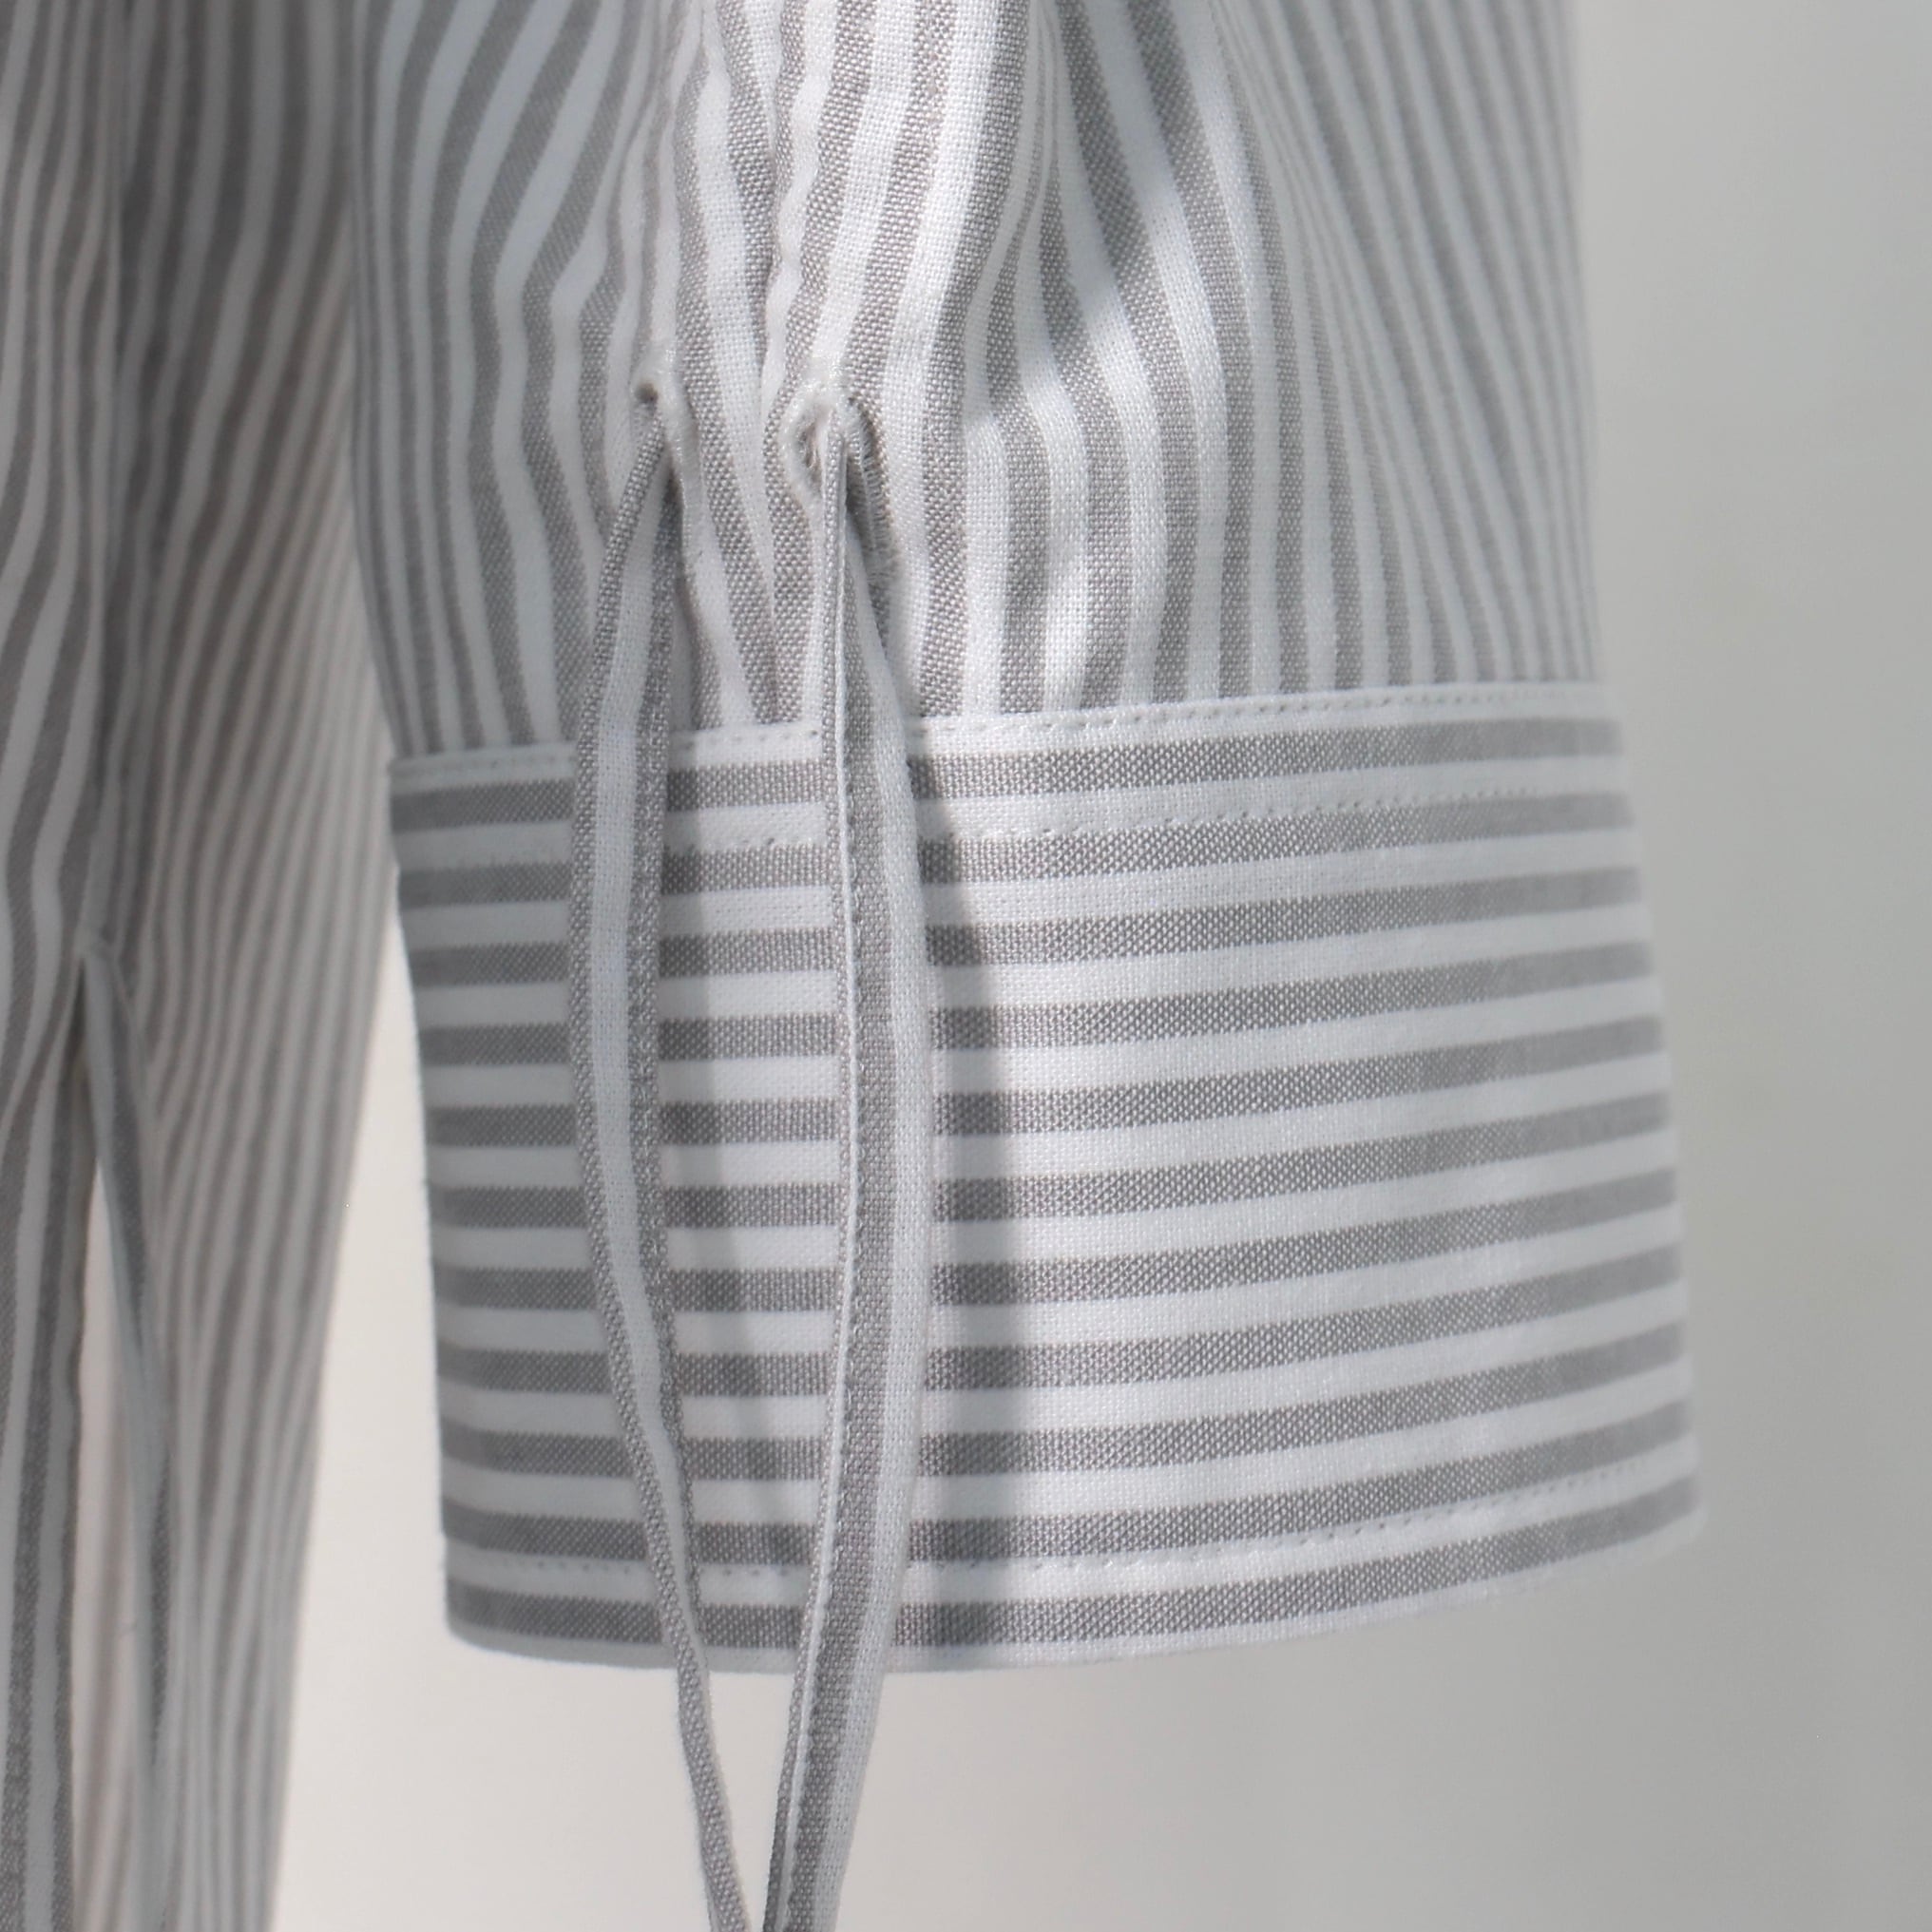 gypsohila  stripe robe shirt  Grayグレー